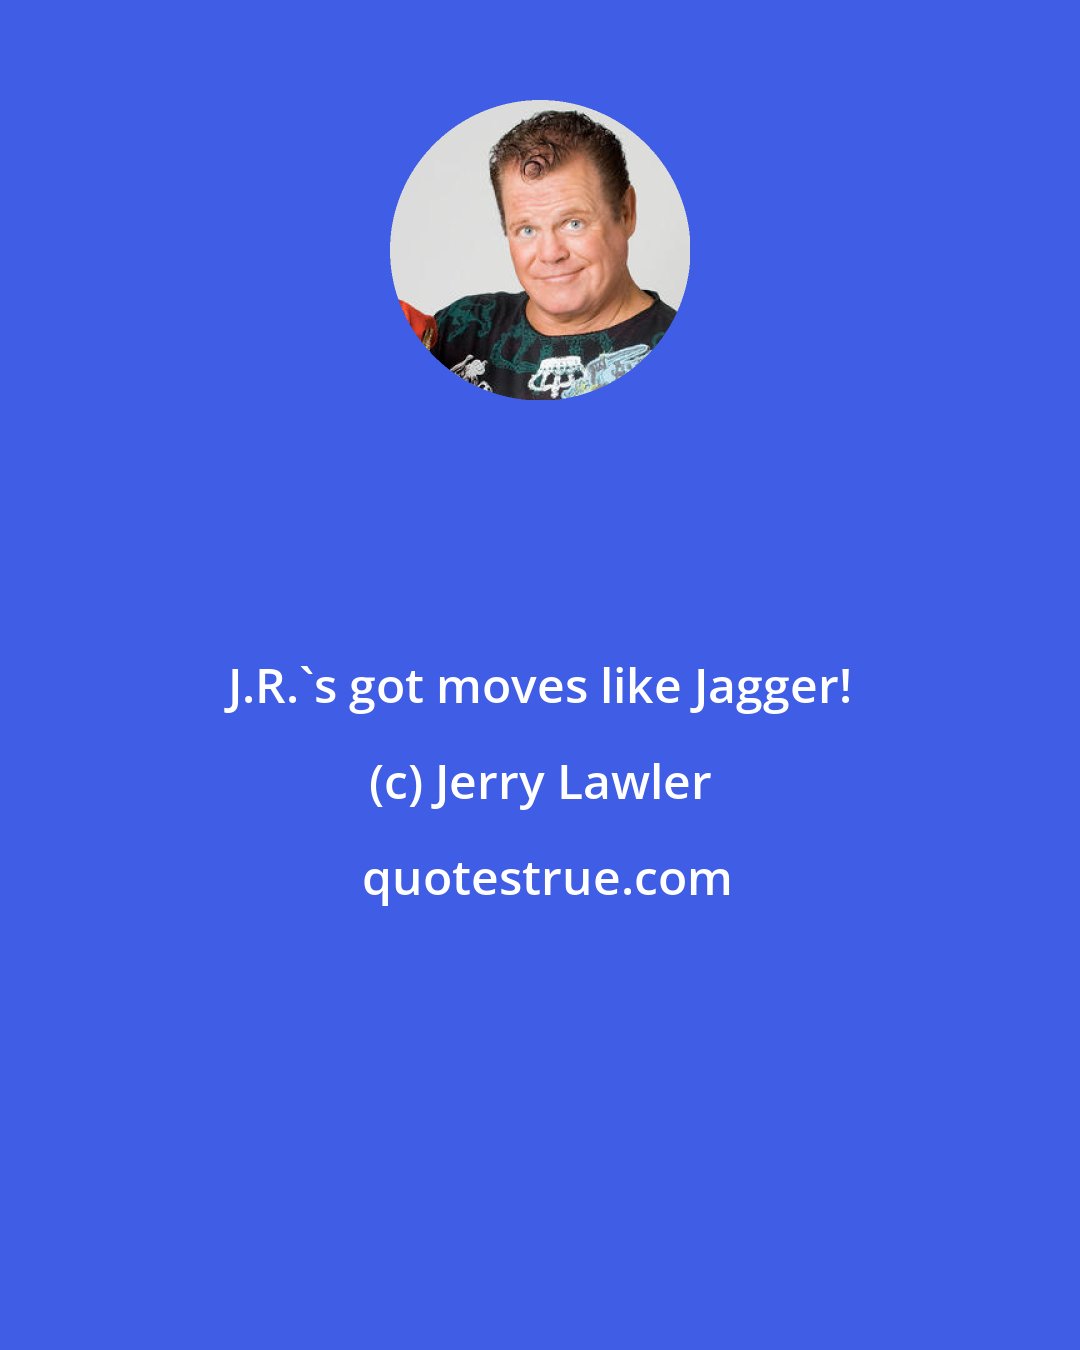 Jerry Lawler: J.R.'s got moves like Jagger!